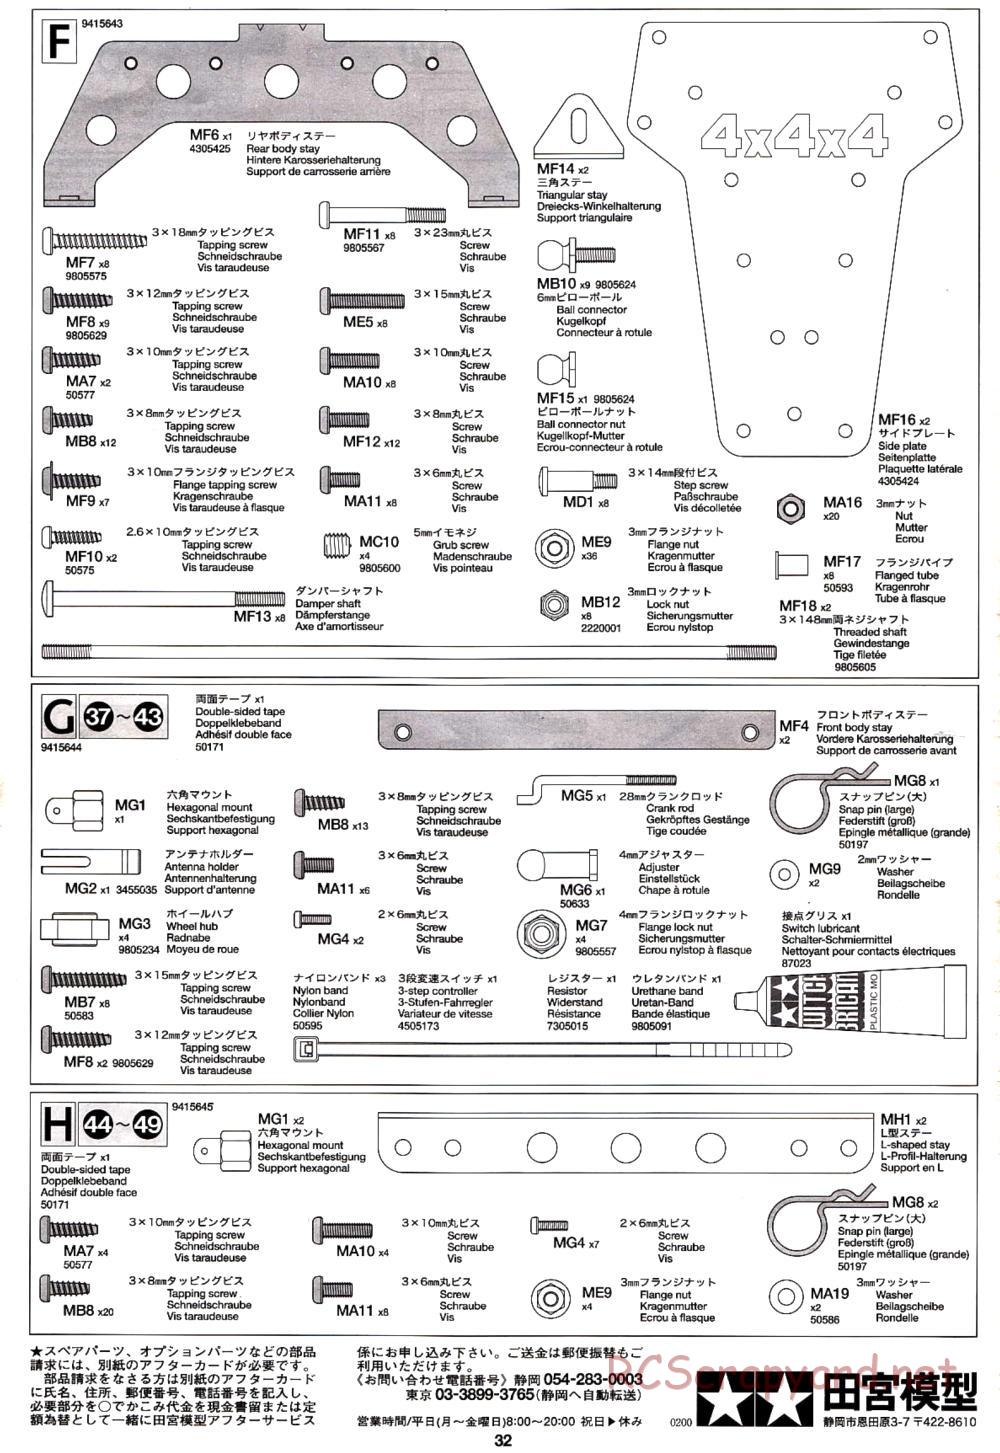 Tamiya - Juggernaut 2 Chassis - Manual - Page 32